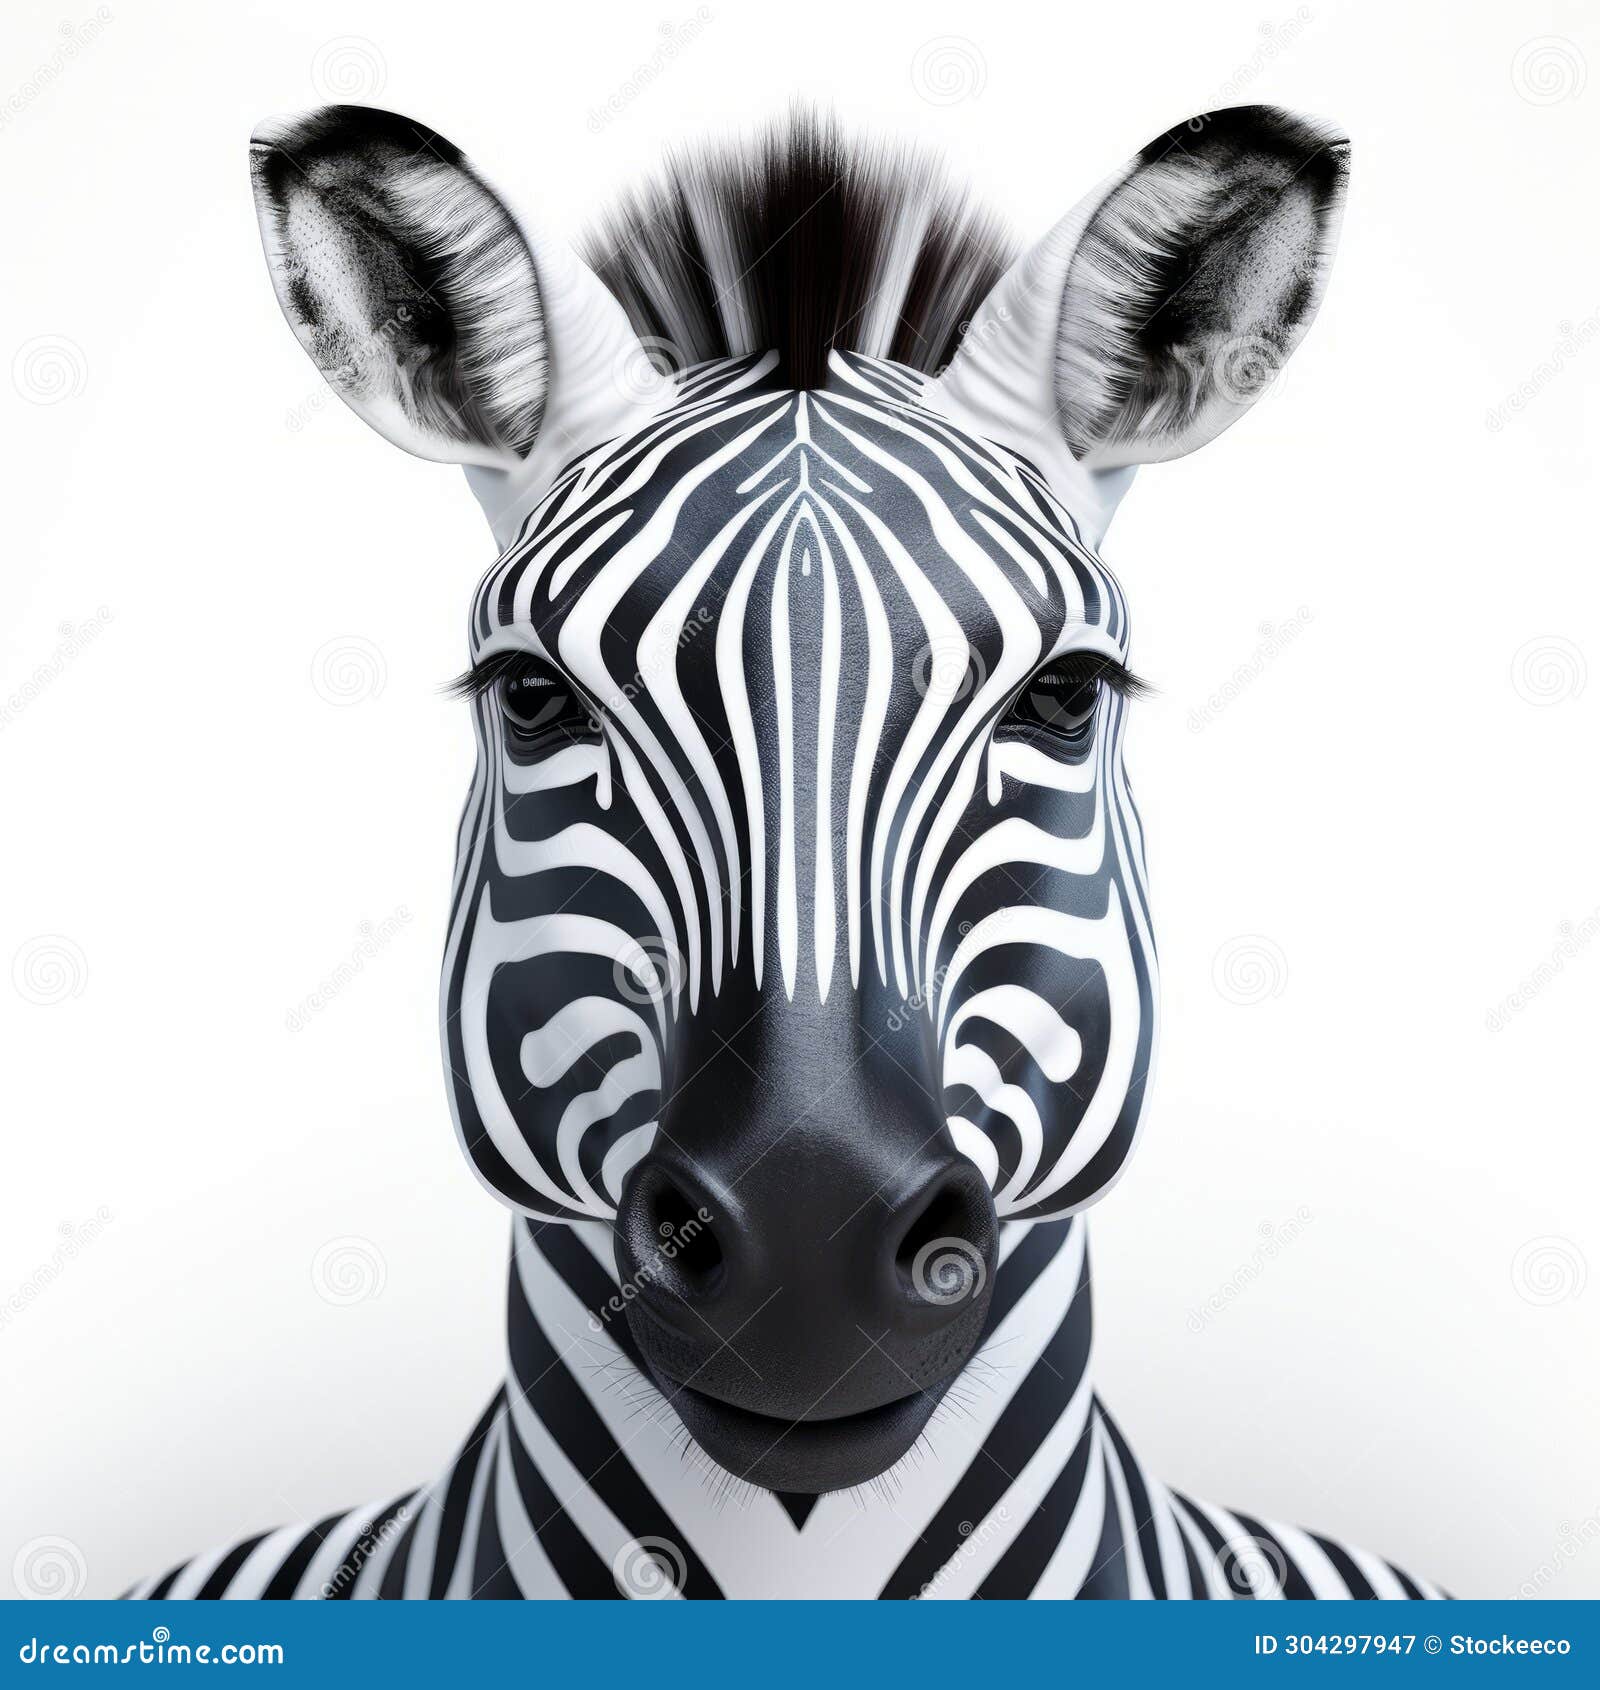 zebra skinned graphic er: high-key lighting and distinctive noses